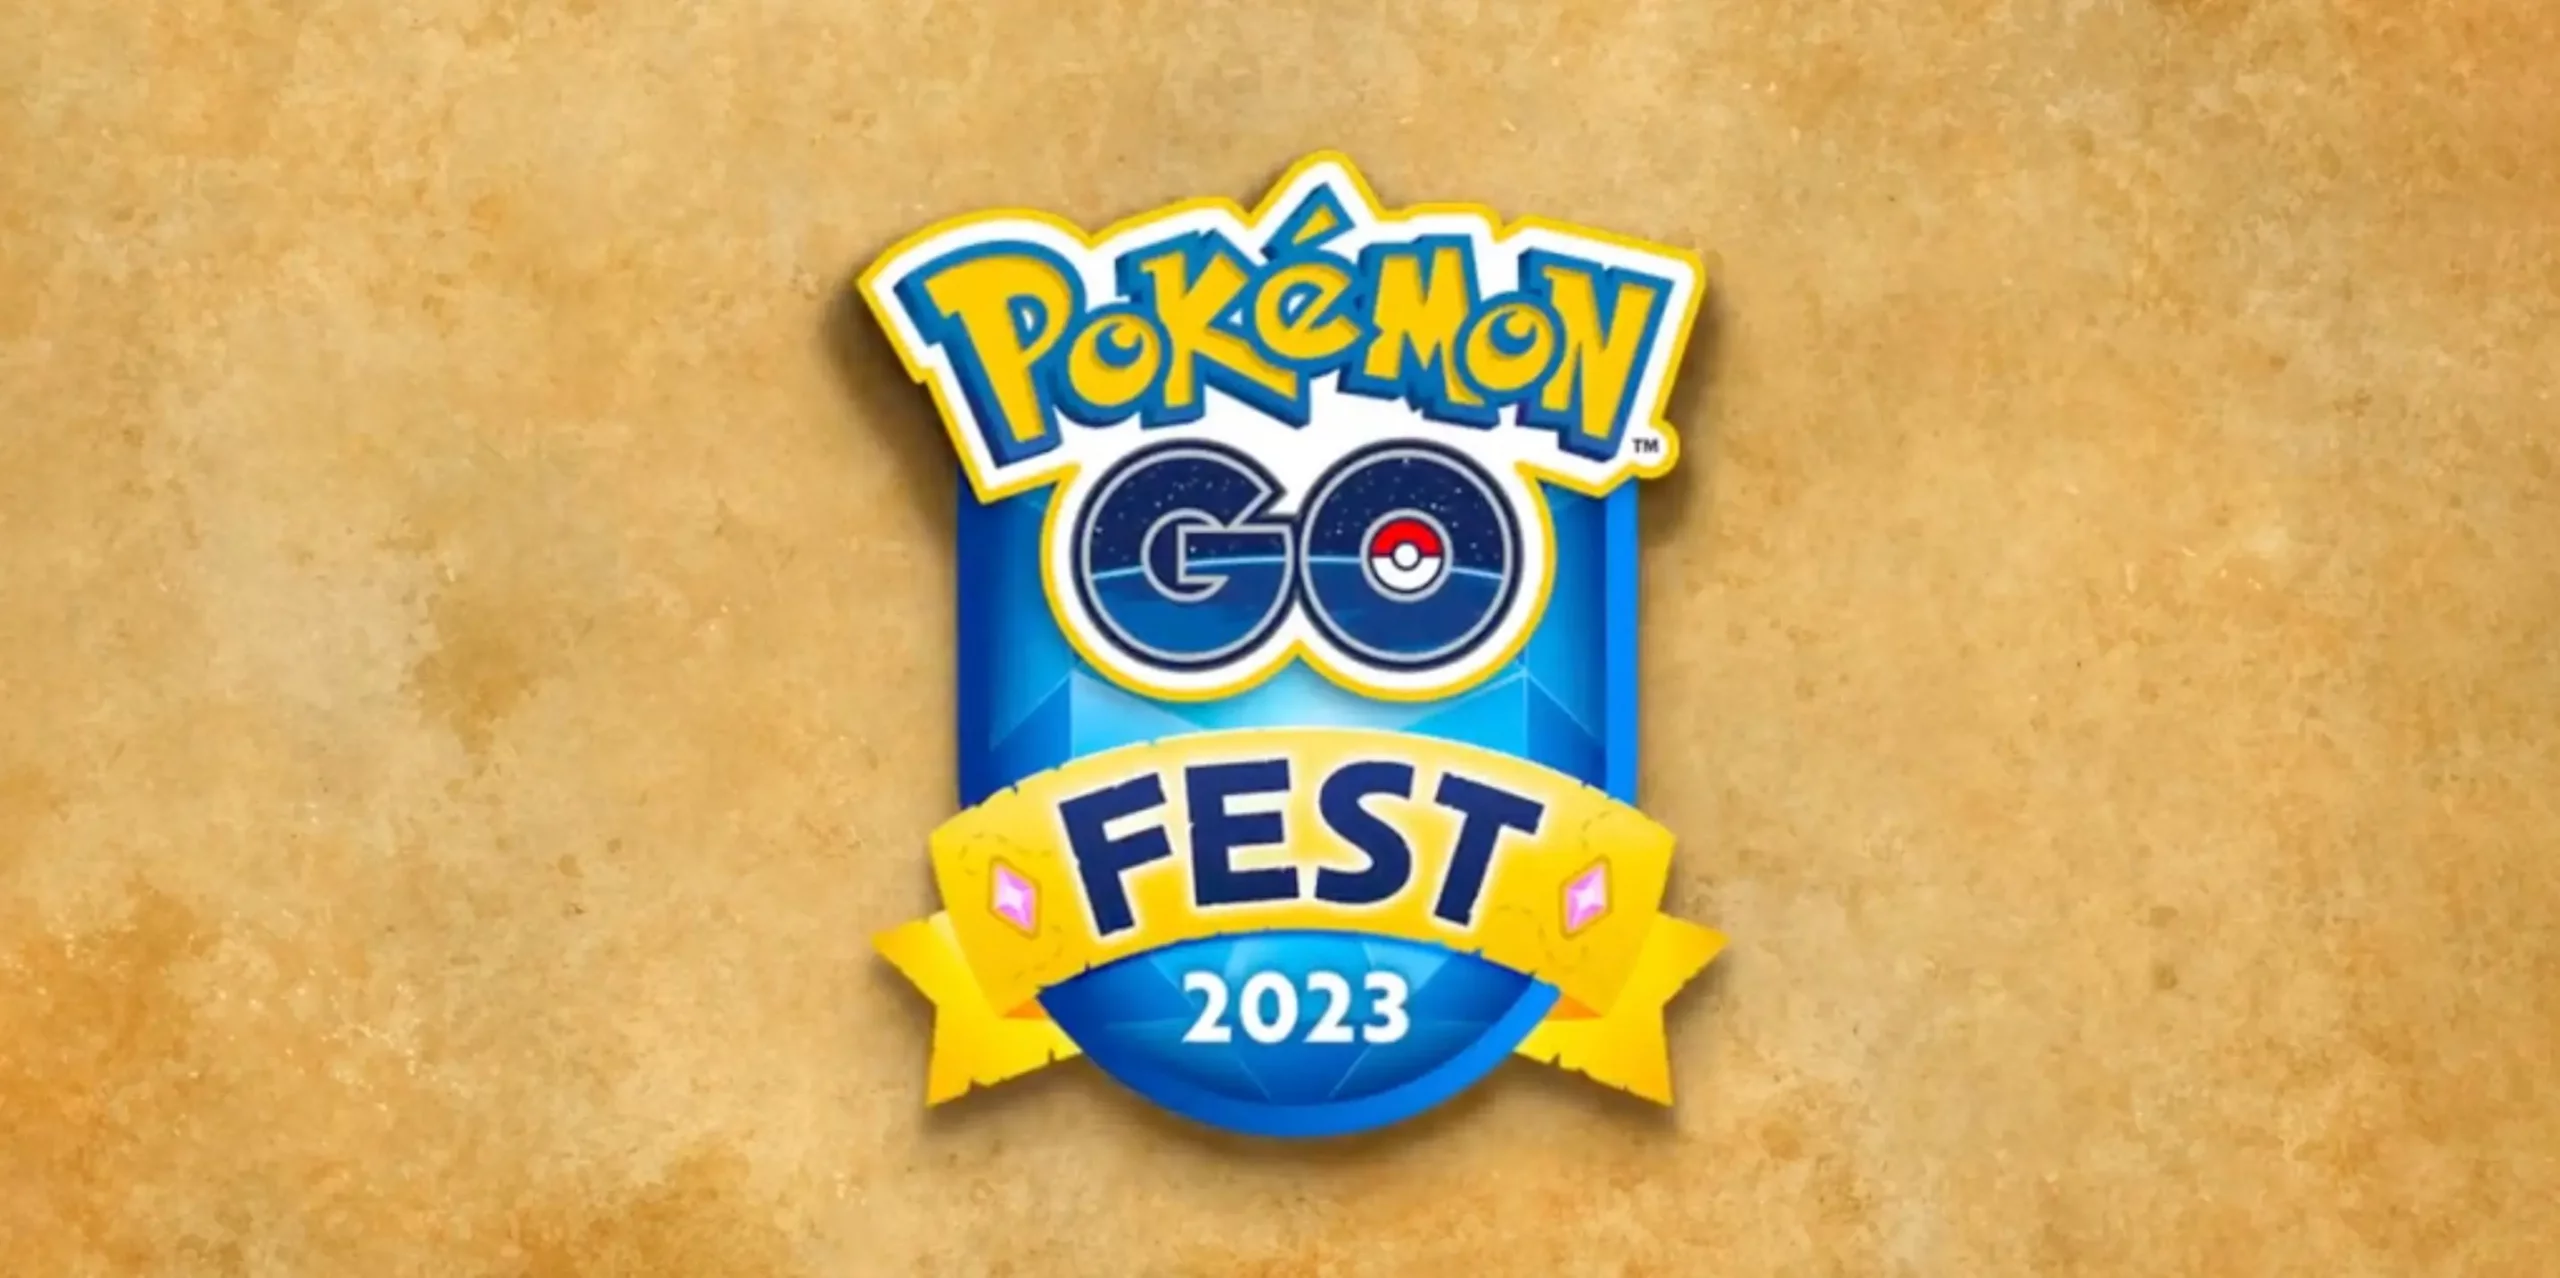 Pokémon GO Fest events bring a €235 million boost to cities